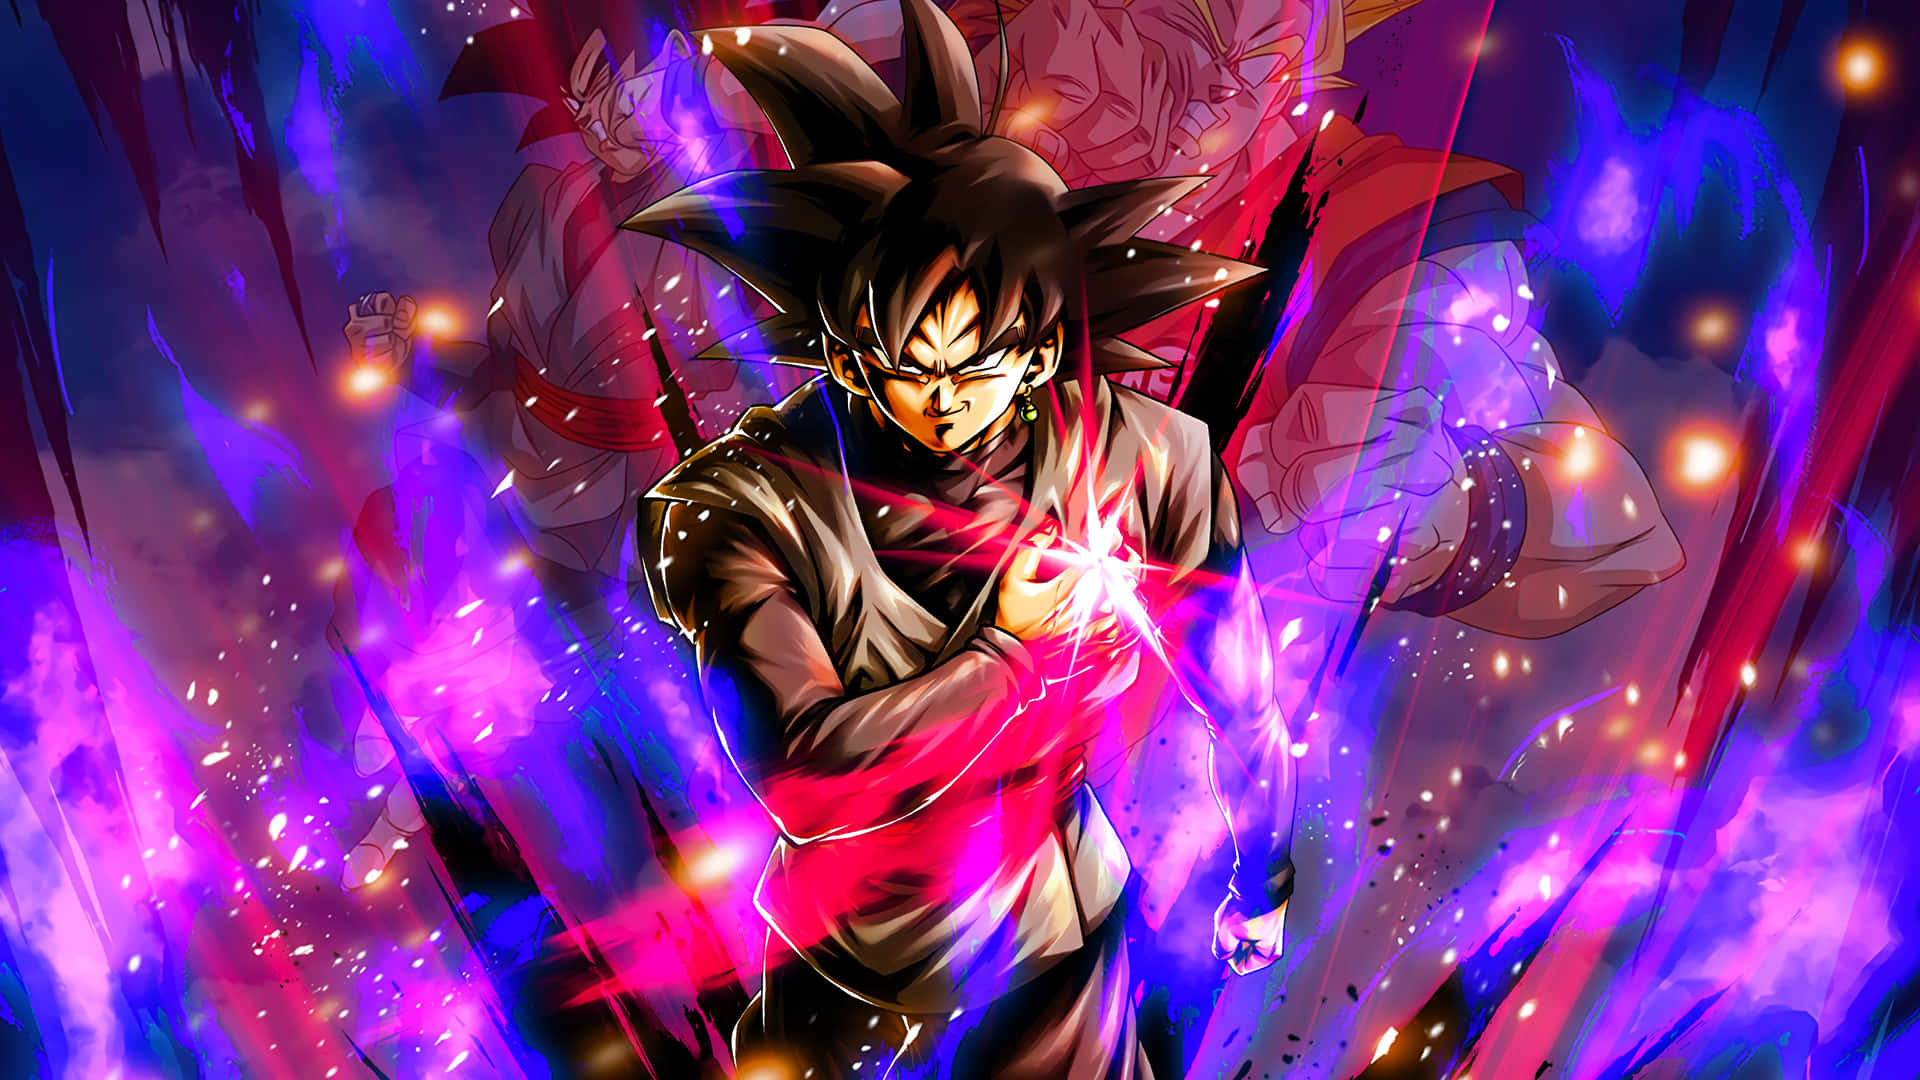 Goku Black Supreme Wallpapers - Top Free Goku Black Supreme Backgrounds -  WallpaperAccess